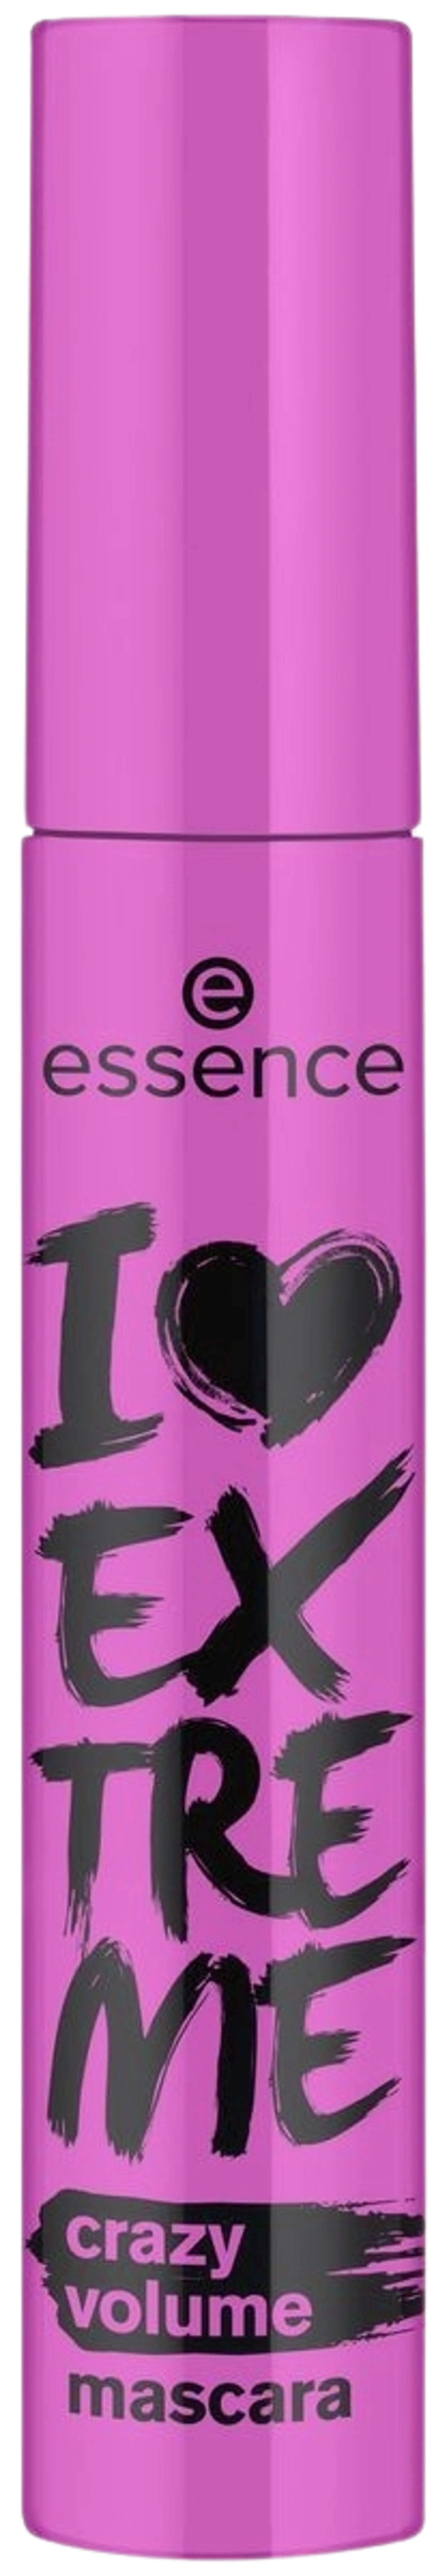 essence I LOVE EXTREME crazy volume mascara 12 ml - 2